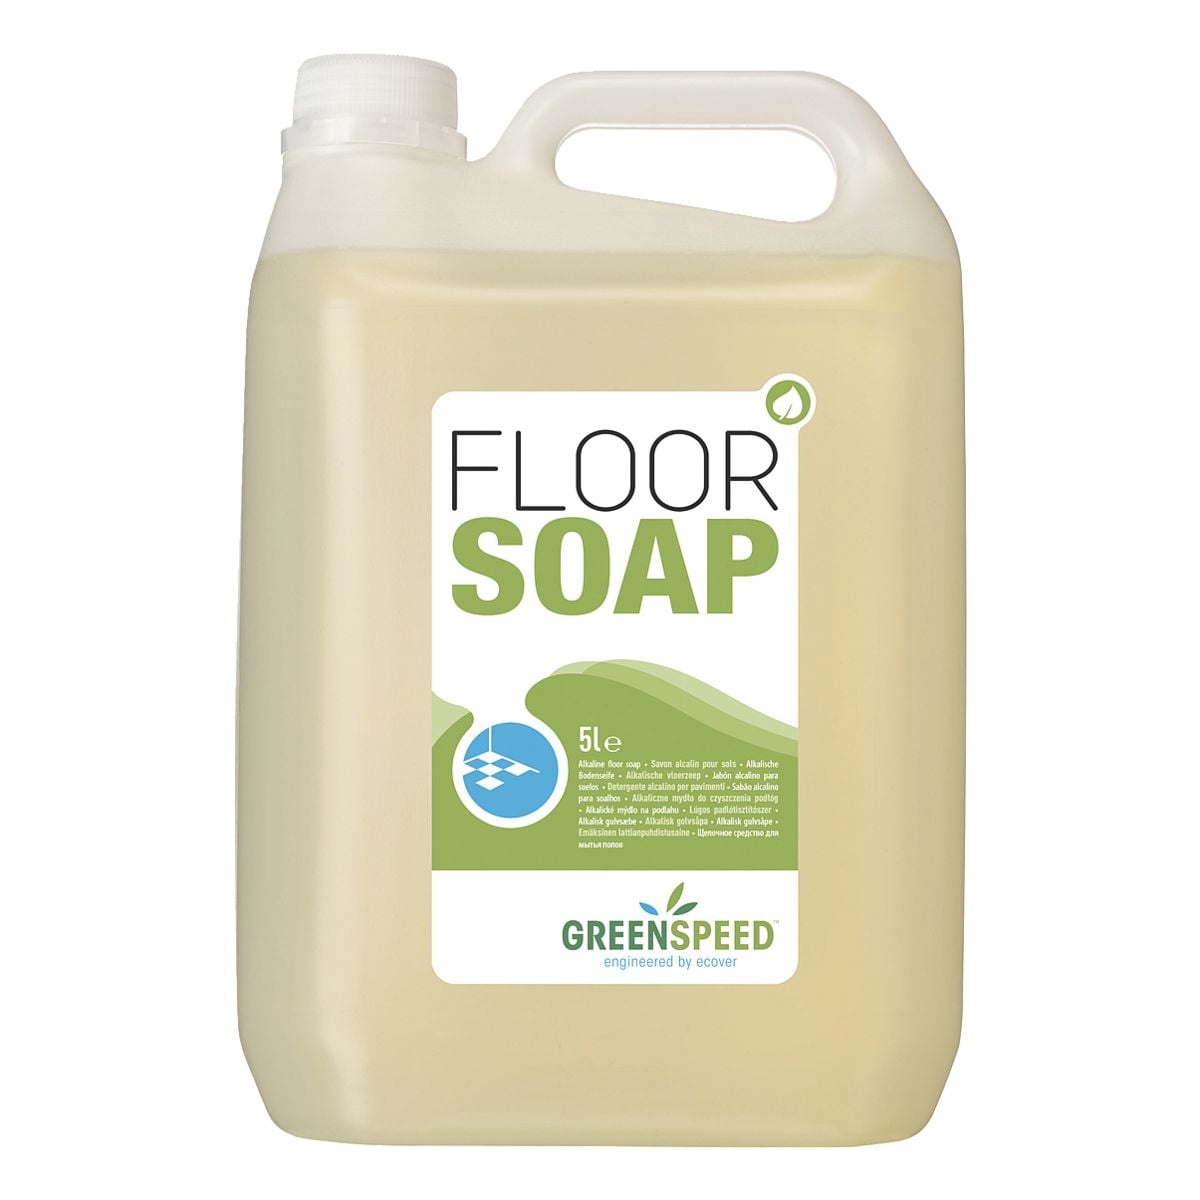 GREENSPEED Vloerreiniger Greenspeed Floor Soap